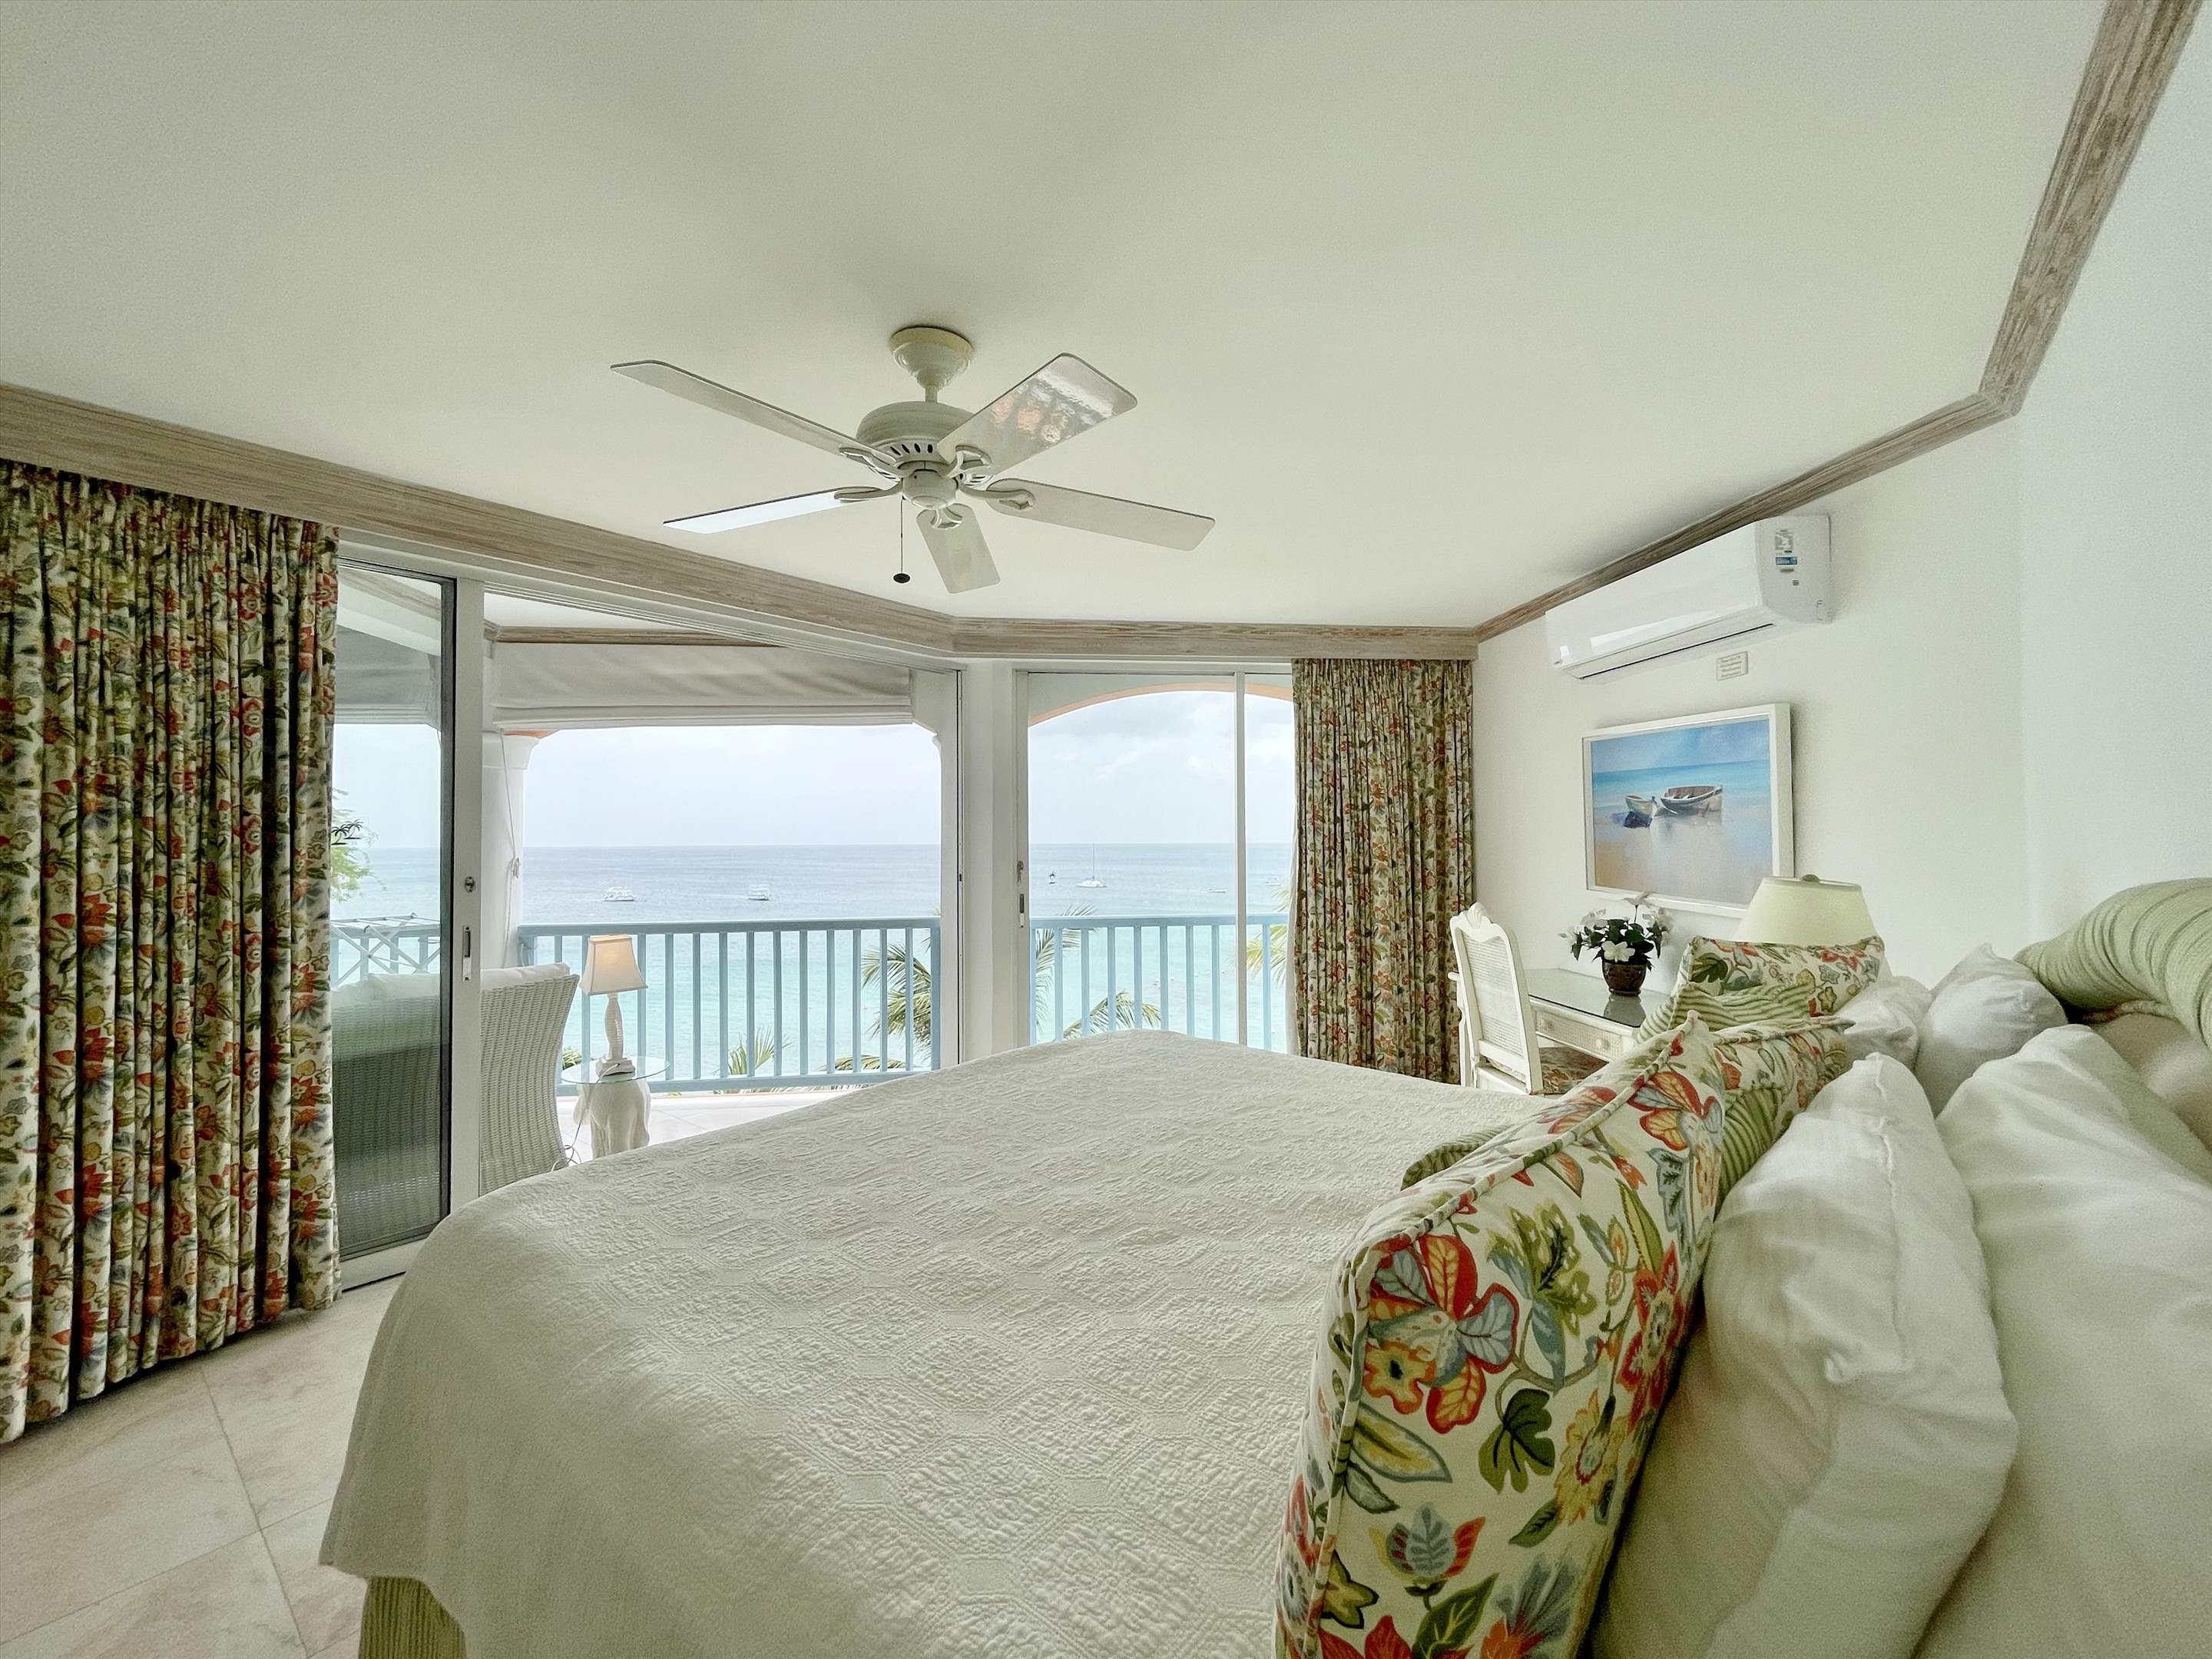 Villas on the Beach 403, 2 bedroom, 2 bedroom apartment in St. James & West Coast, Barbados Photo #10